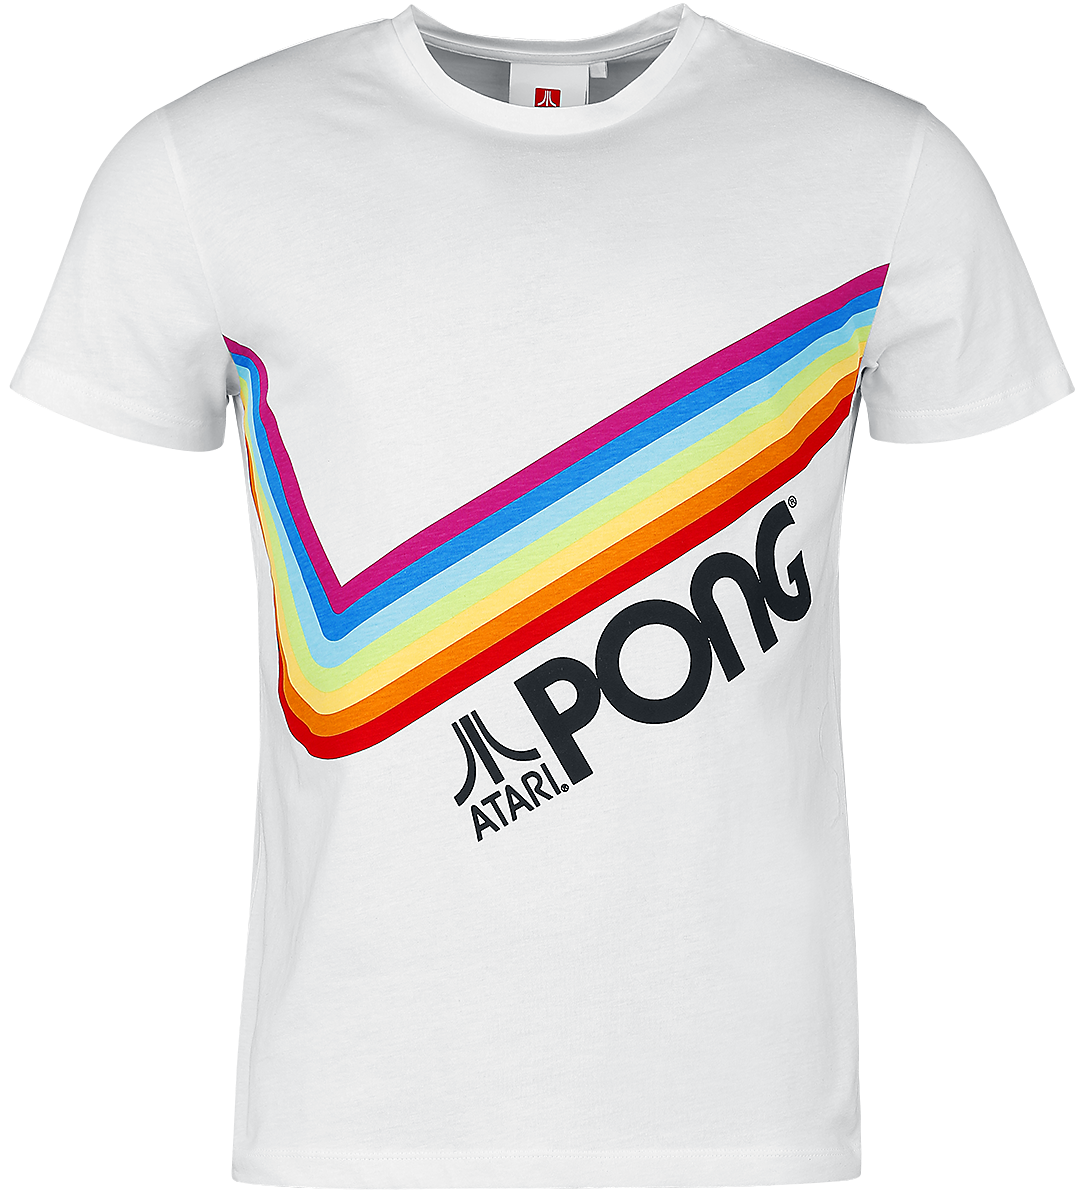 Atari - Pong - Pride Rainbow - T-Shirt - weiß - EMP Exklusiv!